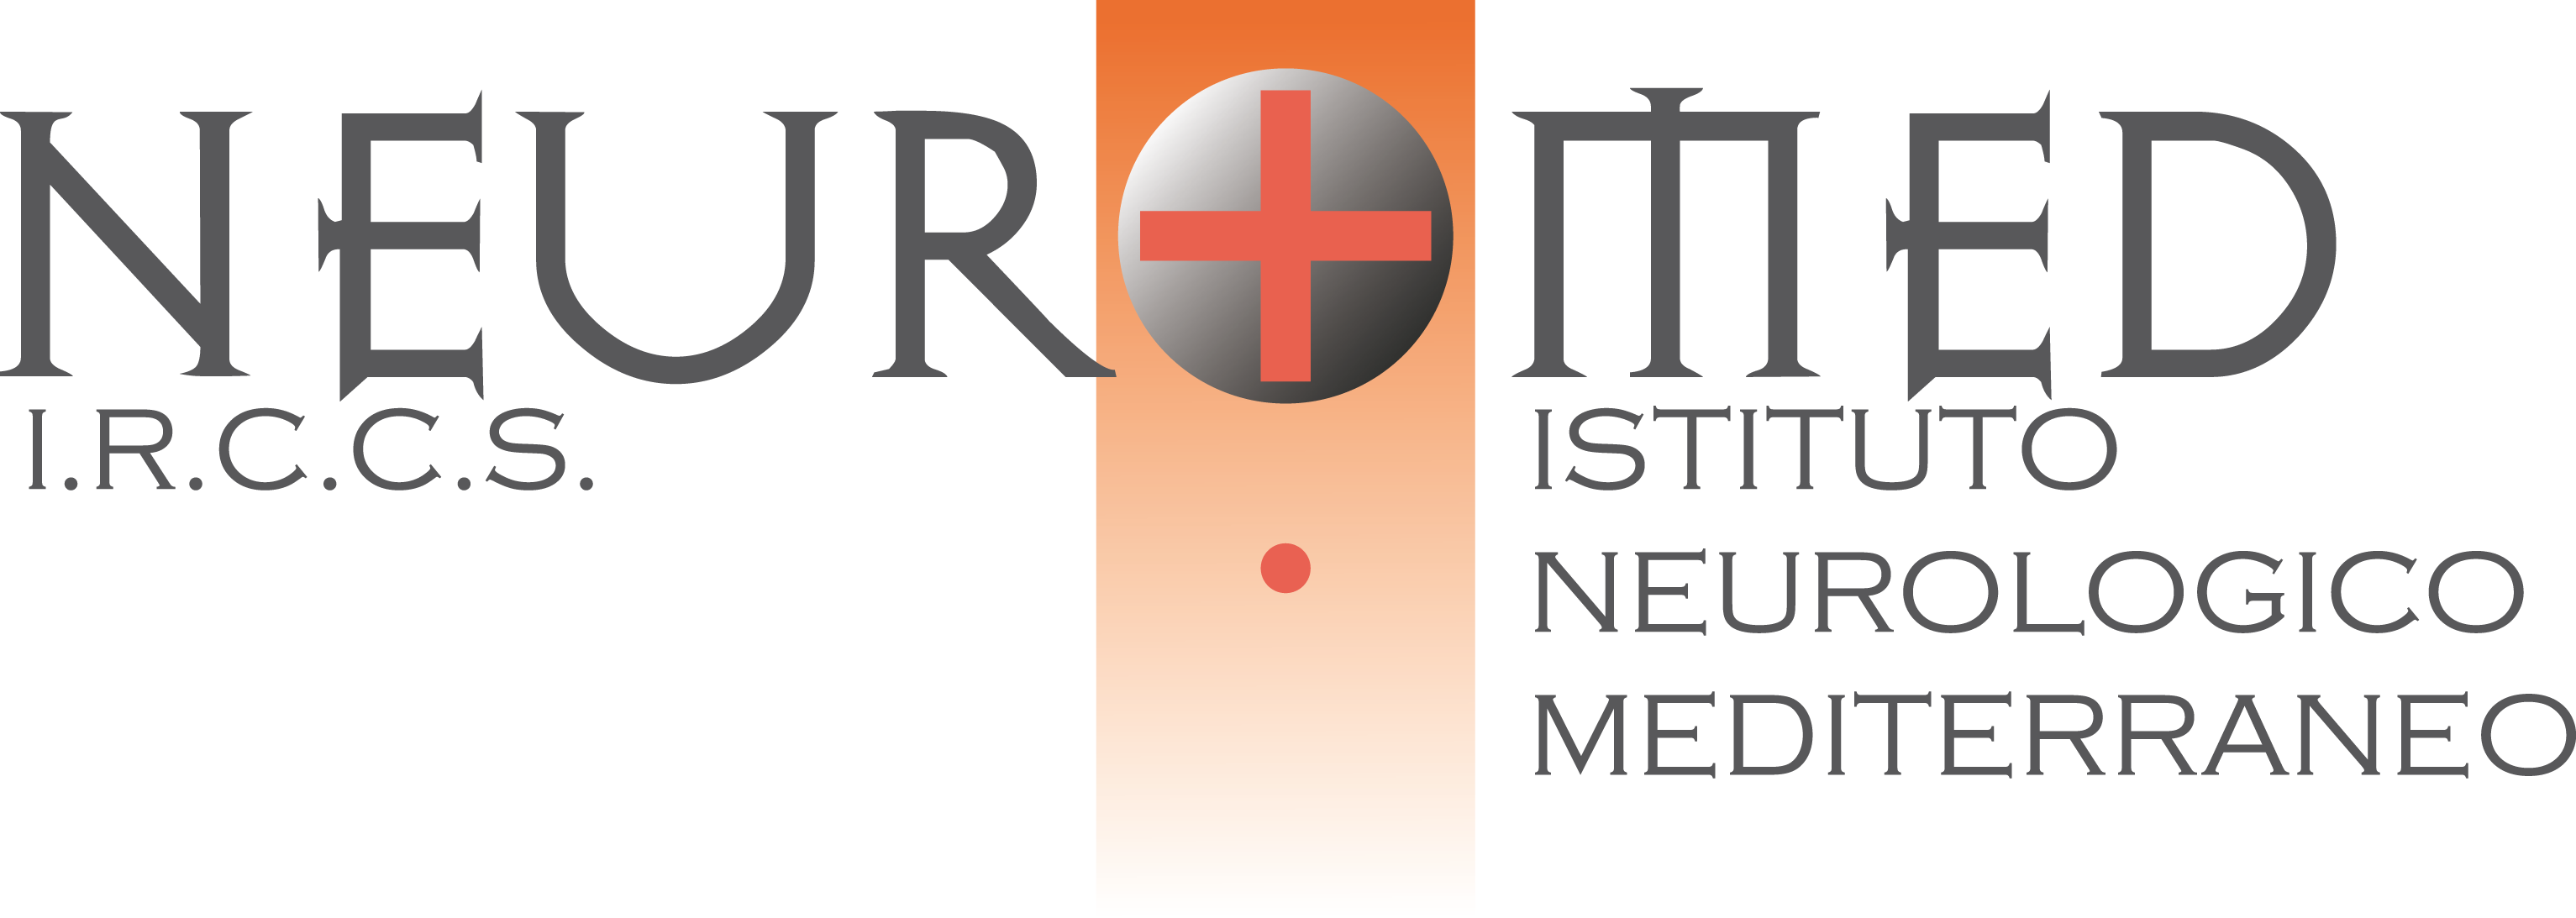 IRCCS Neuromed Istituto Neurologico Mediterraneo